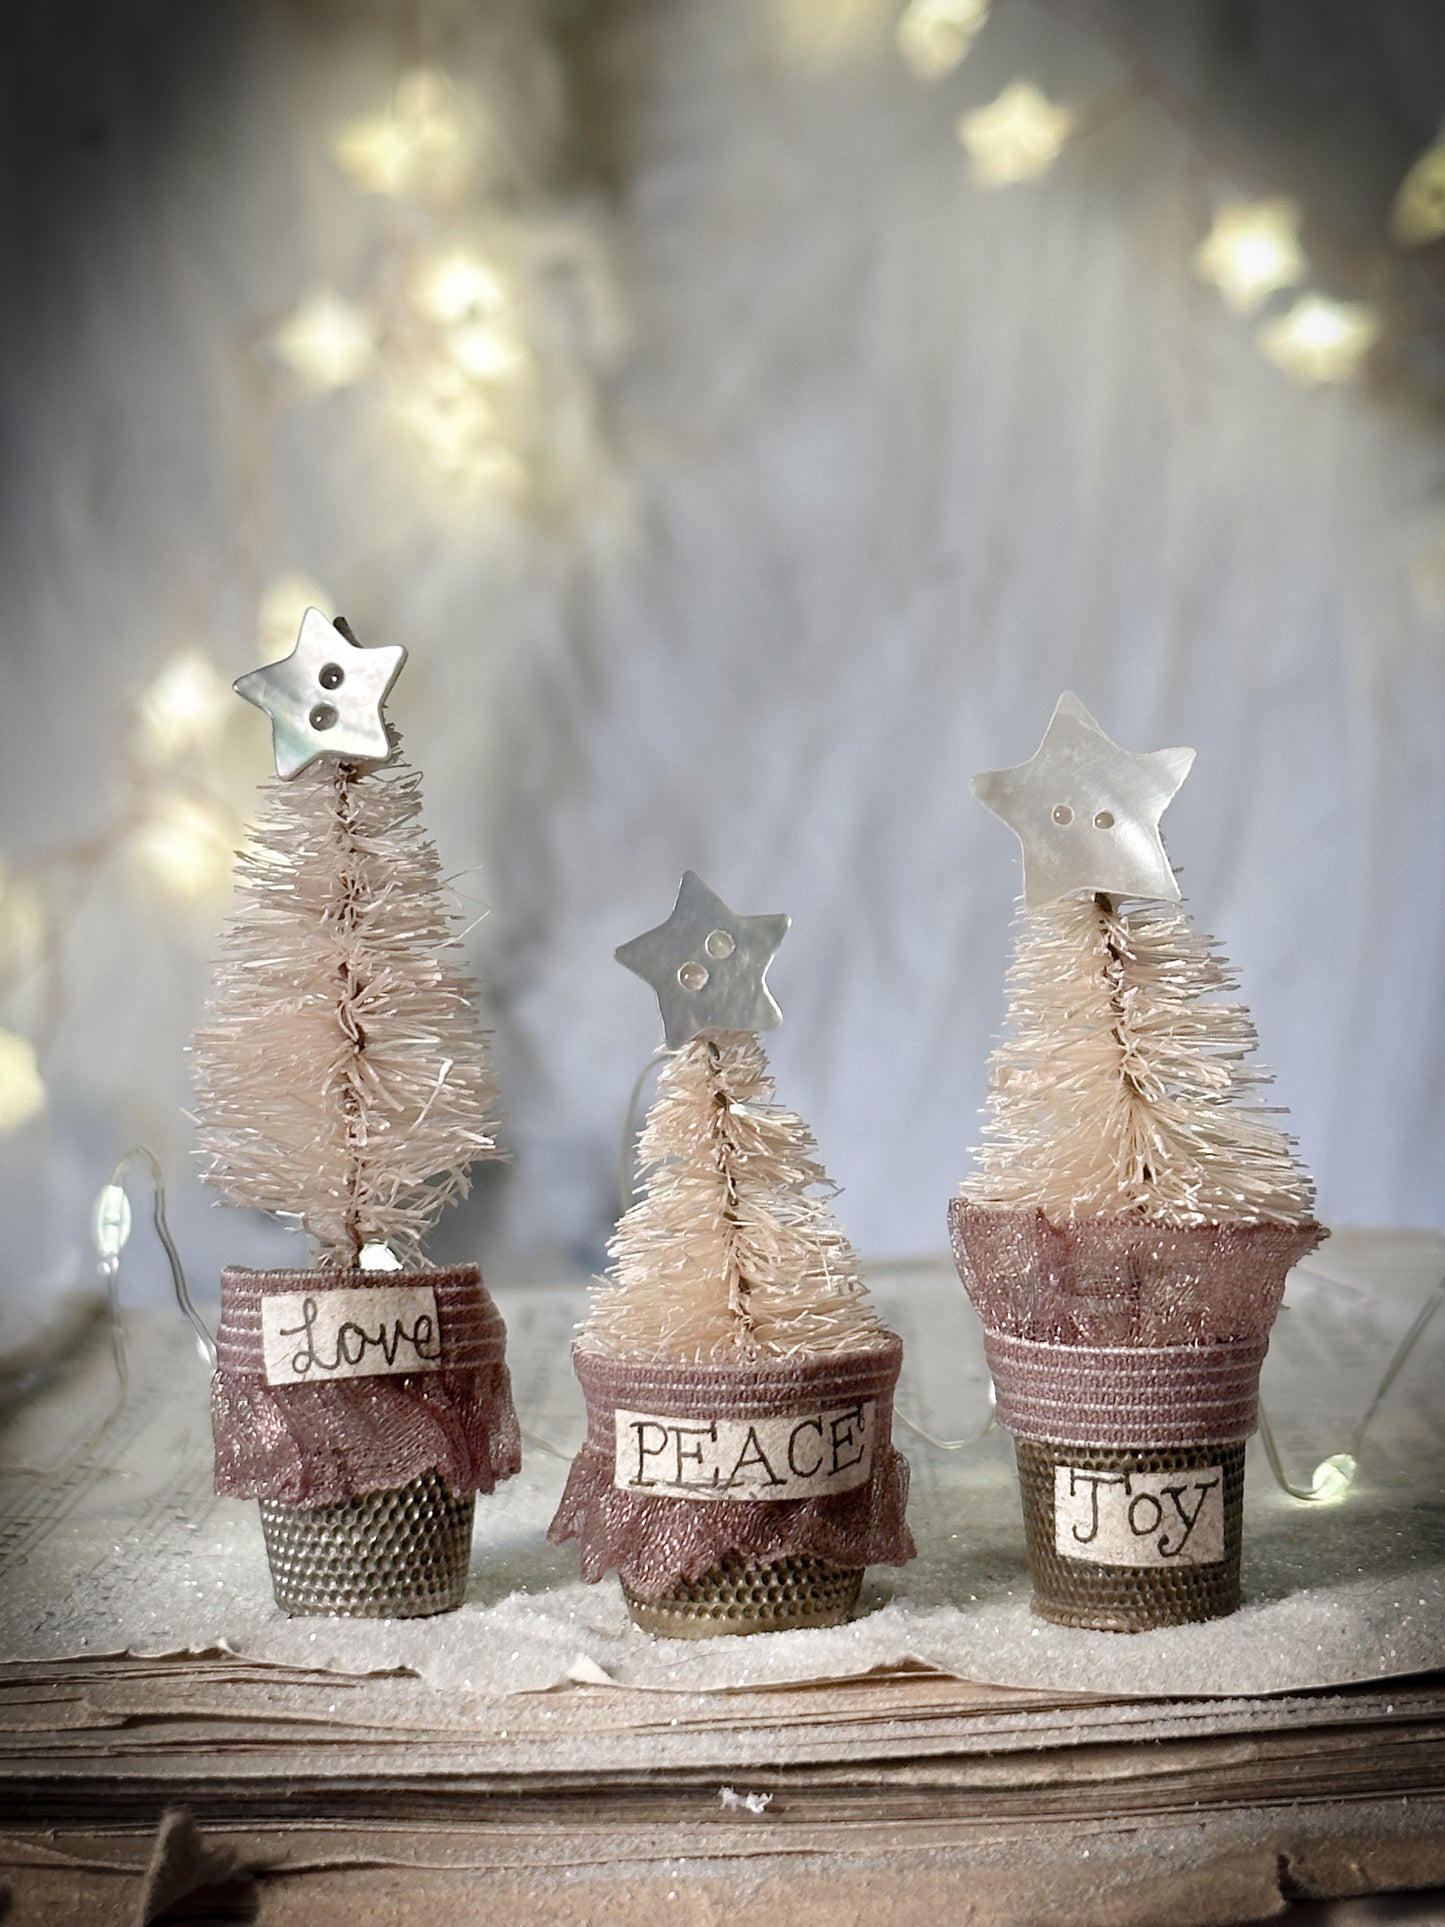 A set of three thimble Christmas trees